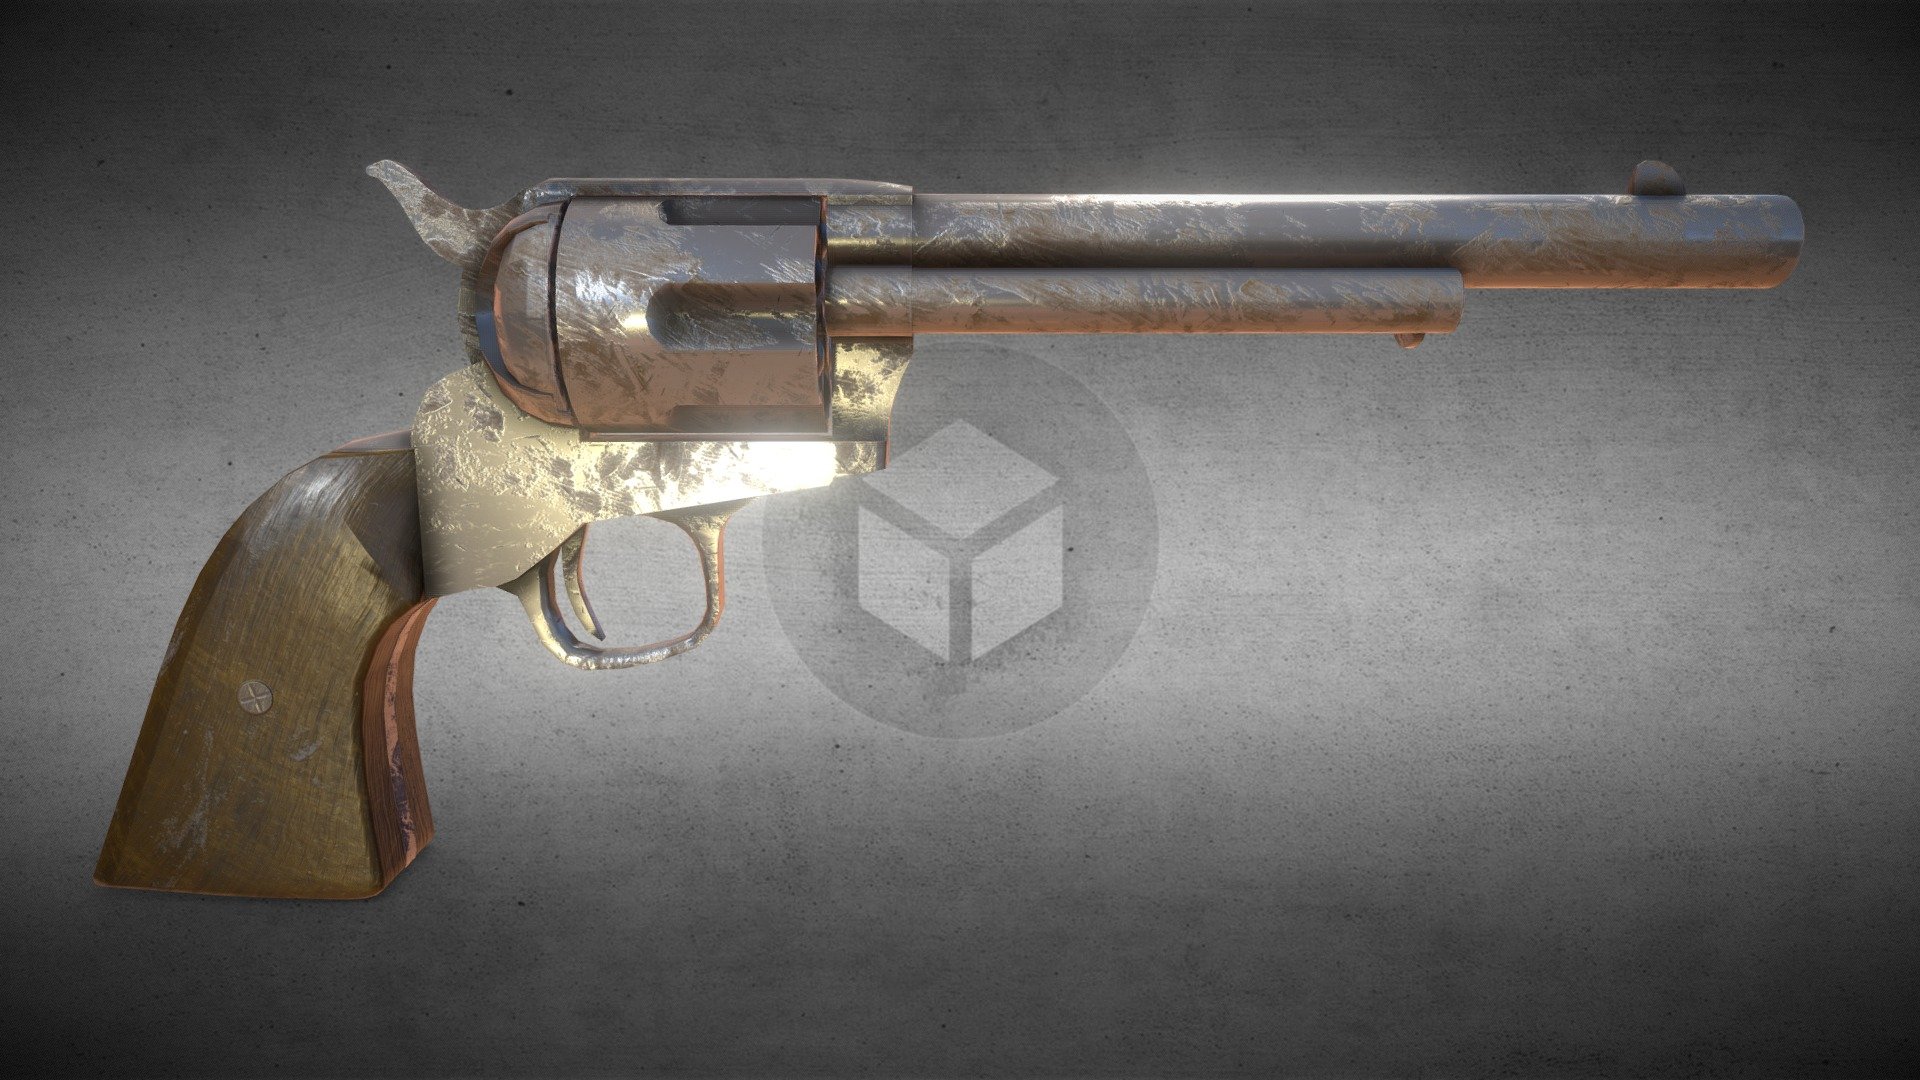 Western Revolver - Colt 45